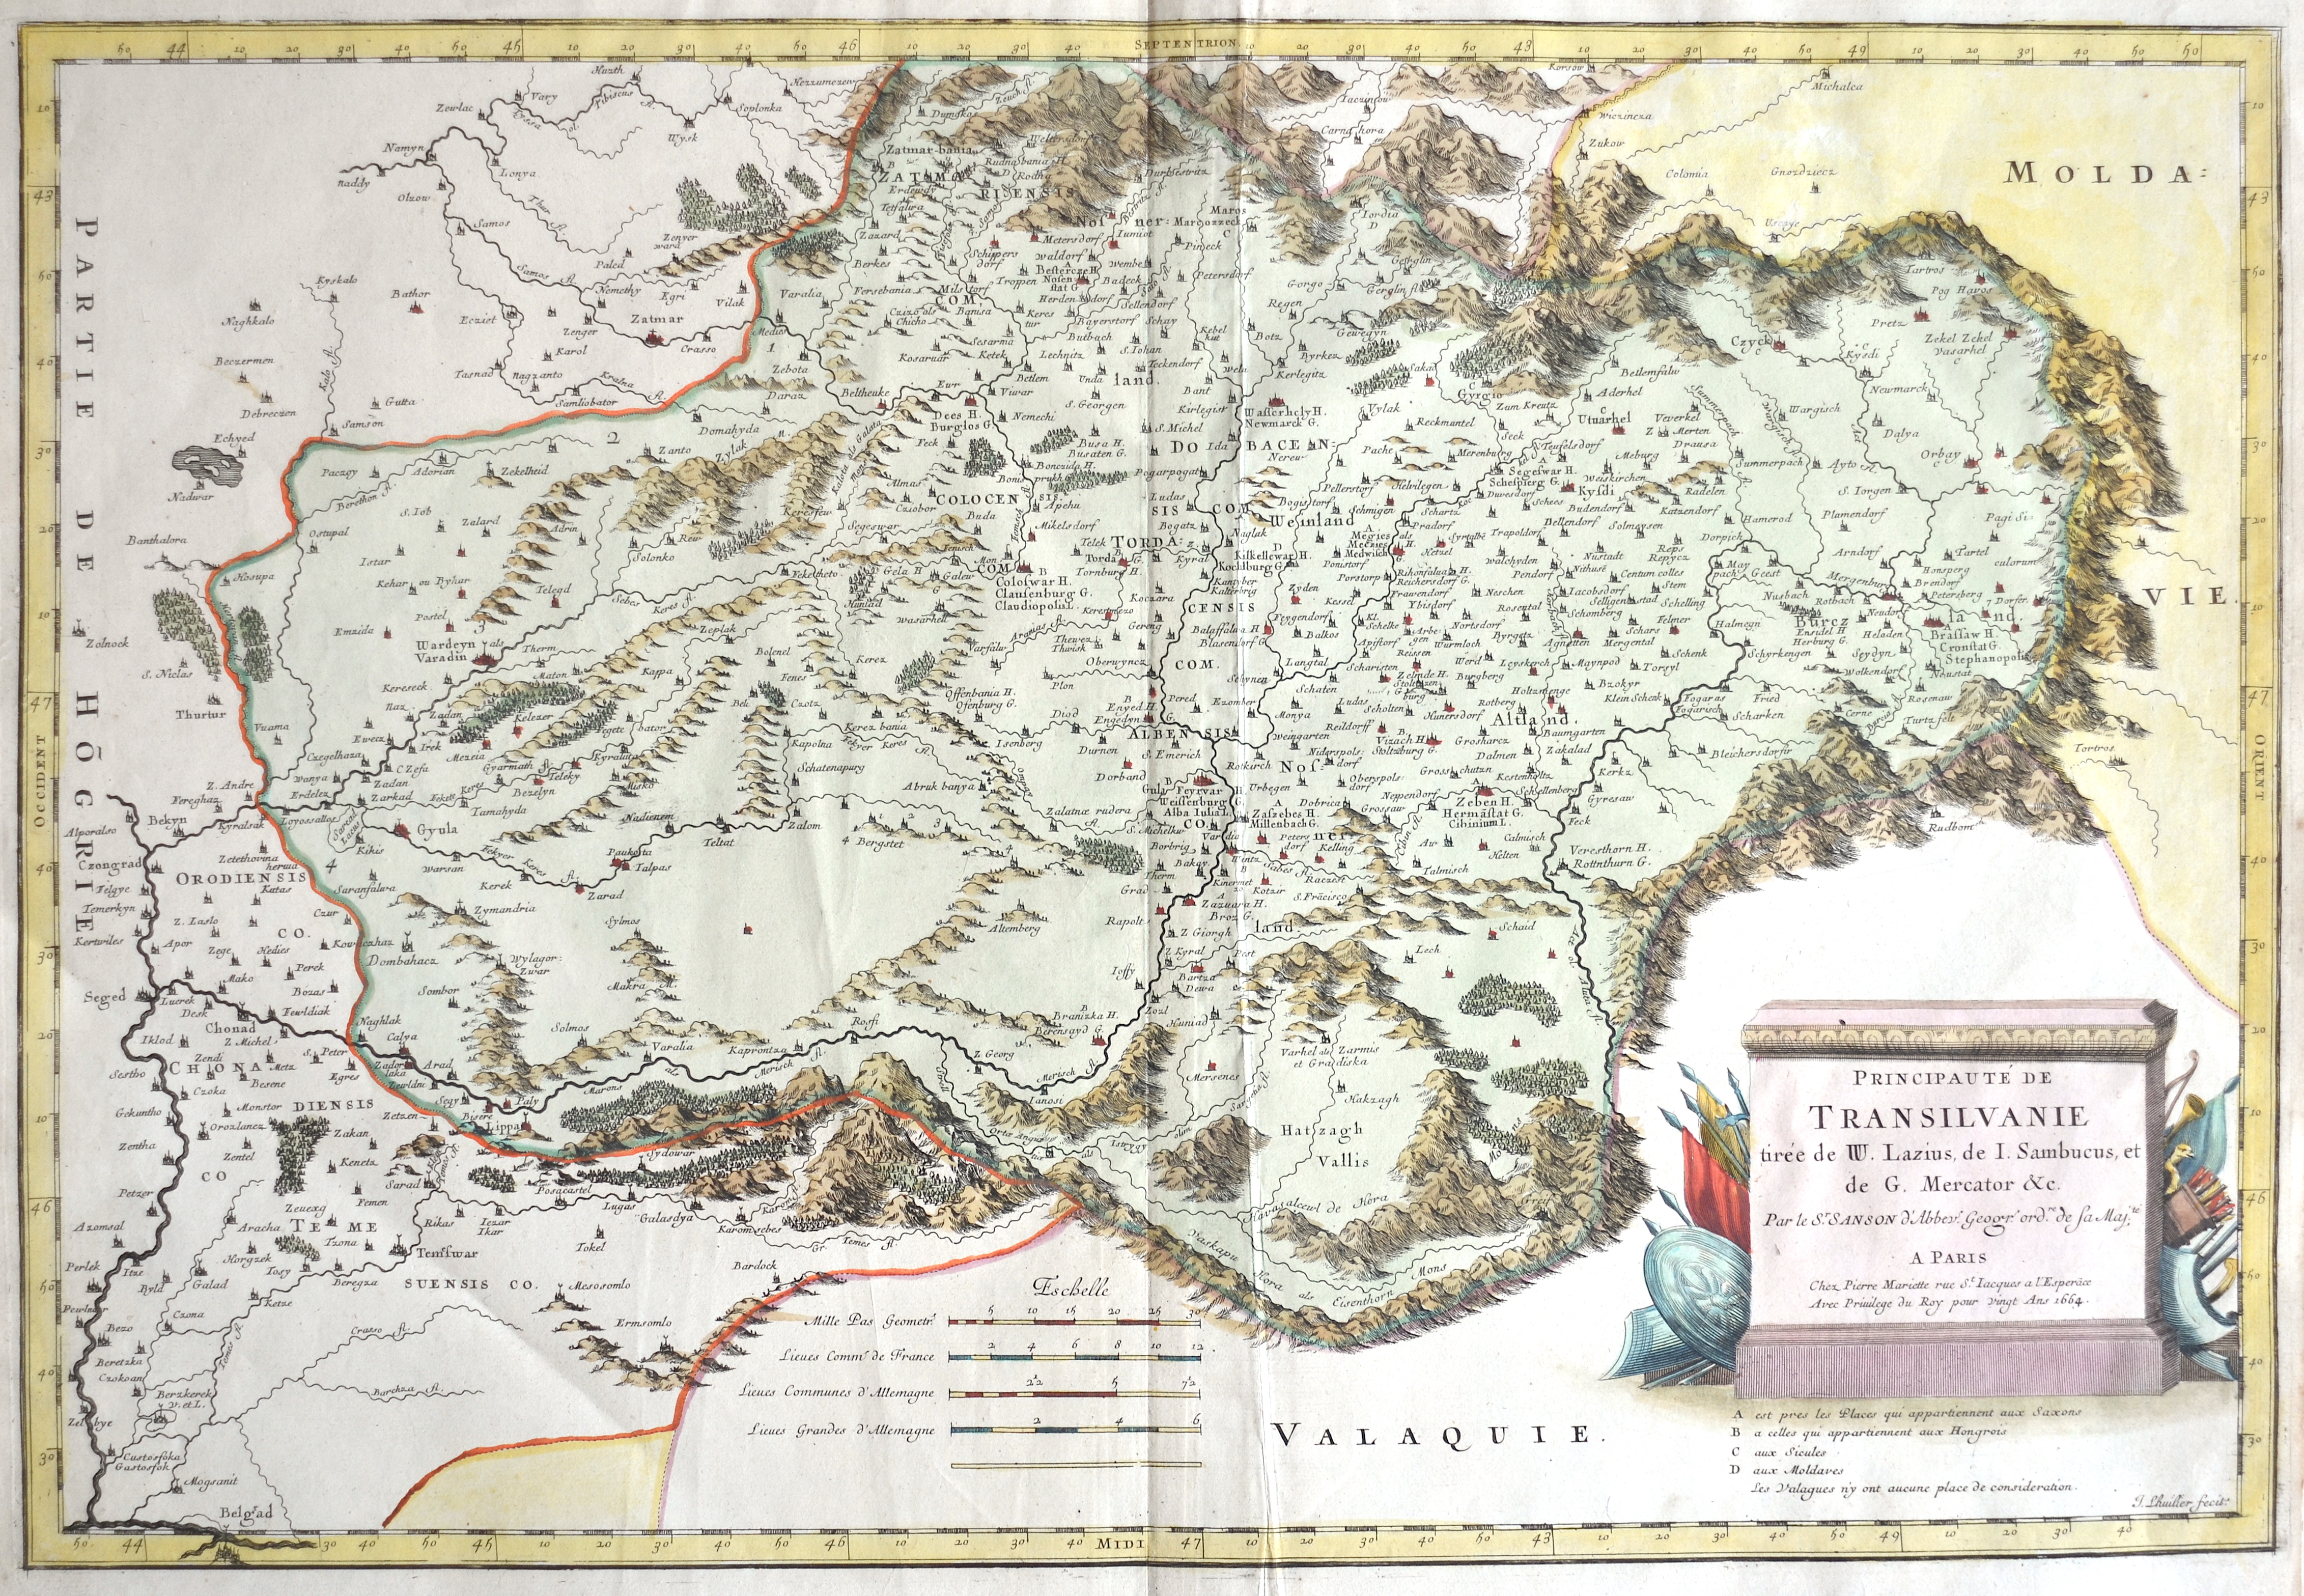 Mariette  Principauté de Transilvanie tirée de W. Lauzius, de I. Sambucus,et de G. Mercator & c.